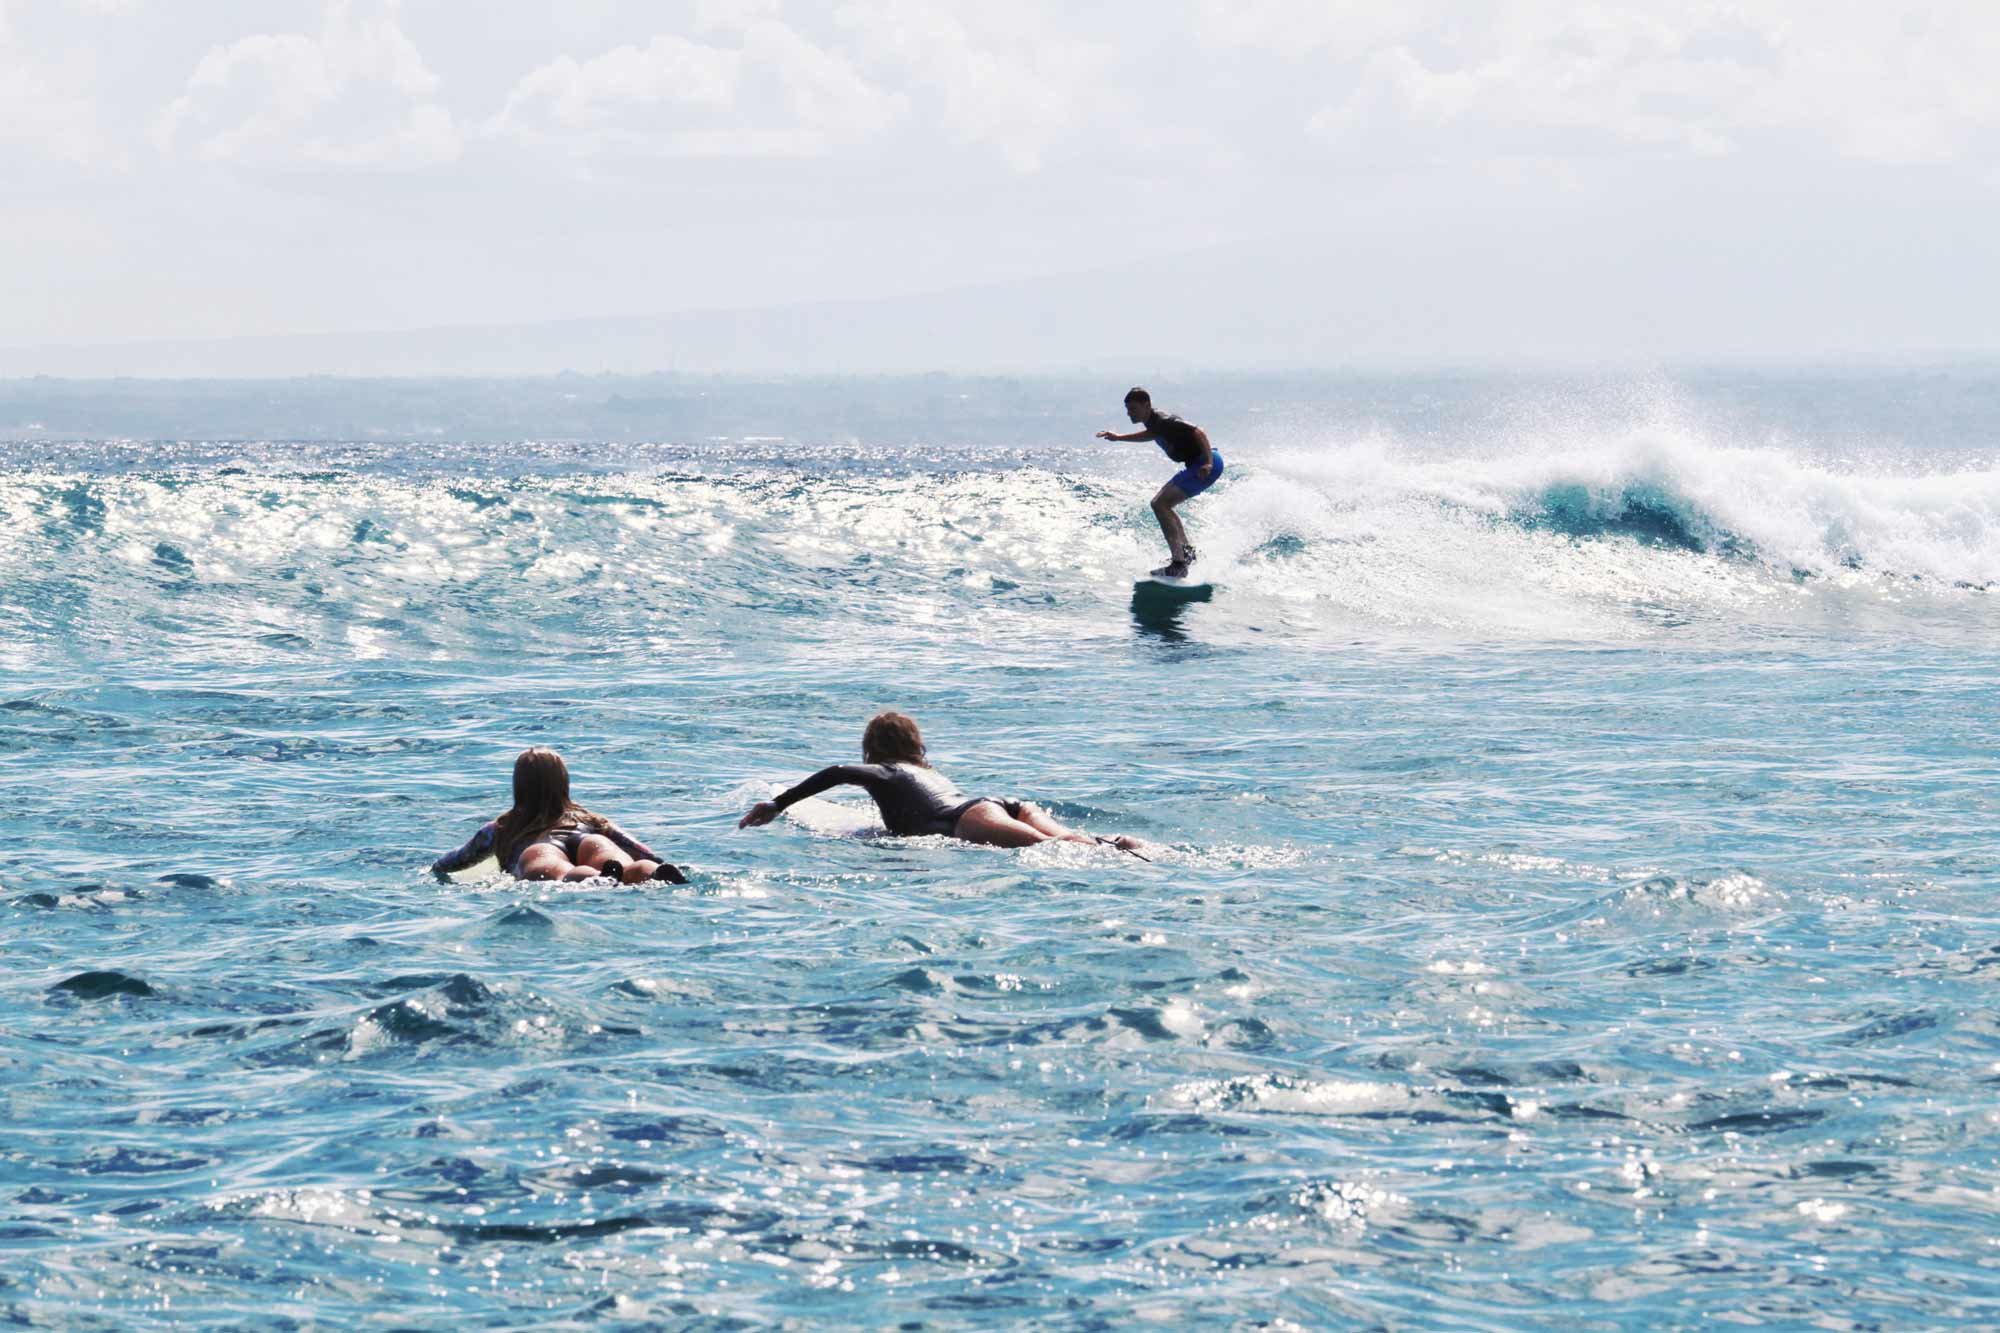 Intermediate level surfer Bali